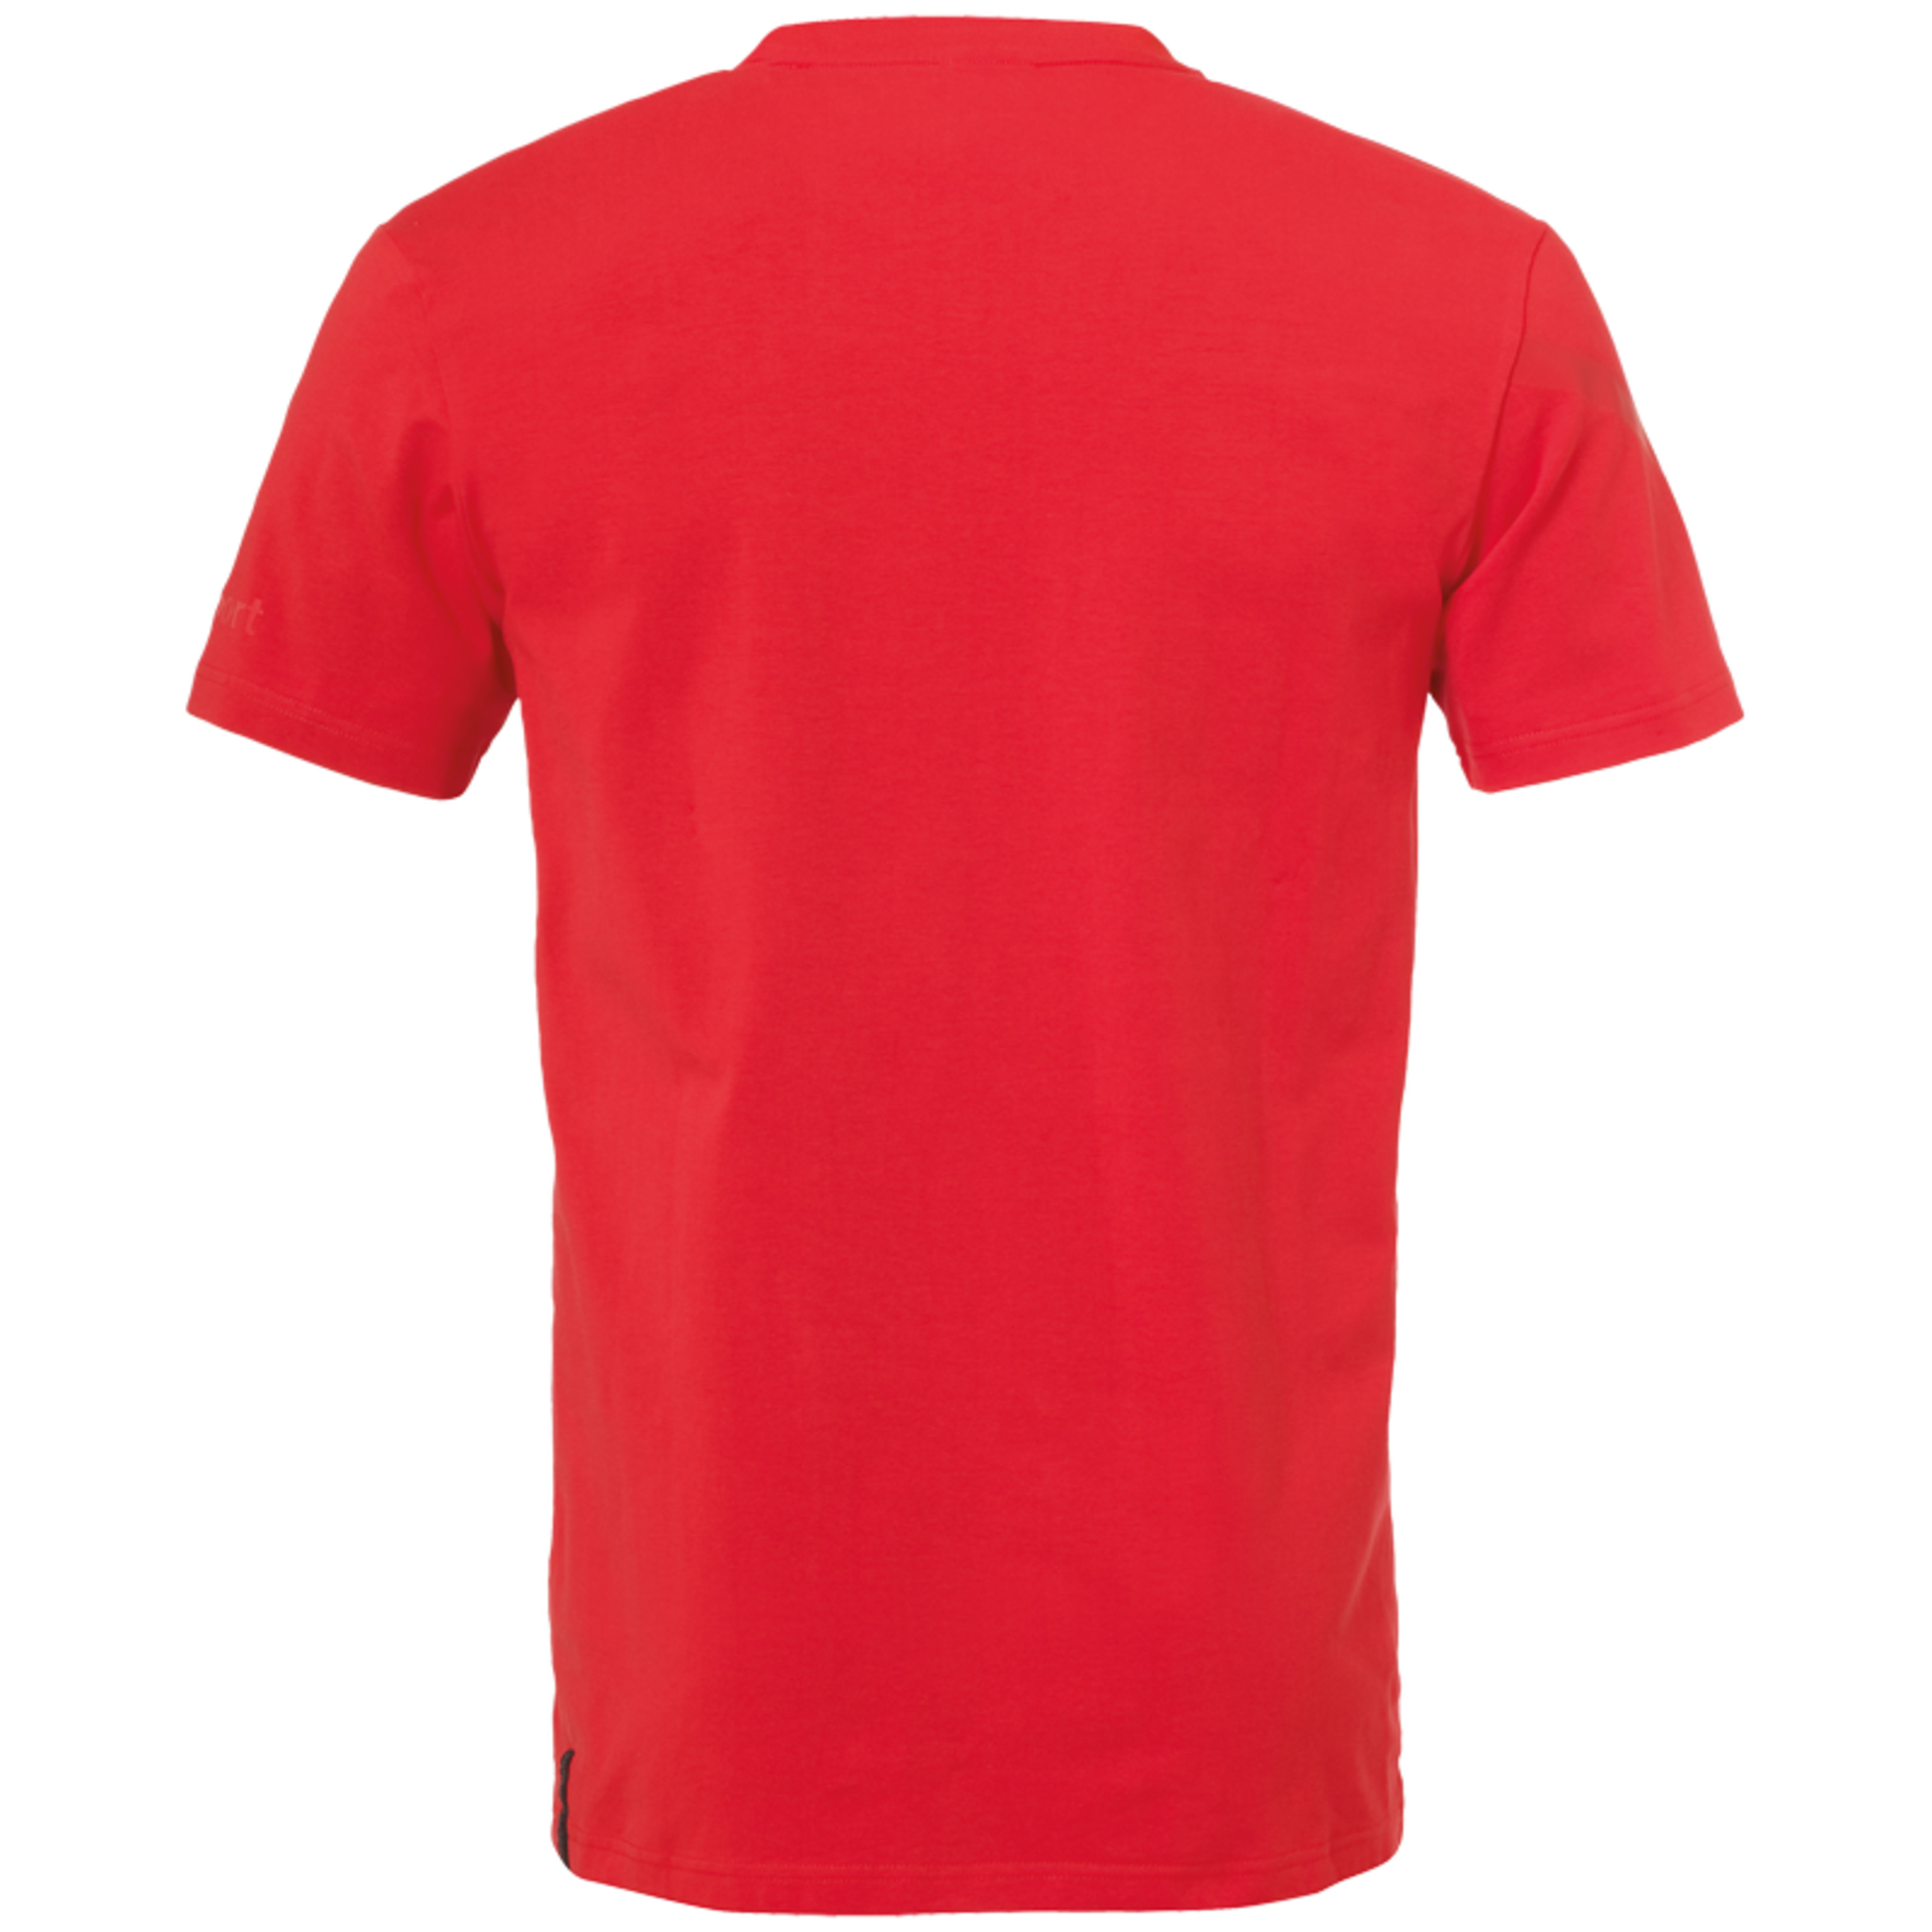 Essential Pro Shirt Red Uhlsport - rojo - Essential Pro Shirt Red Uhlsport  MKP